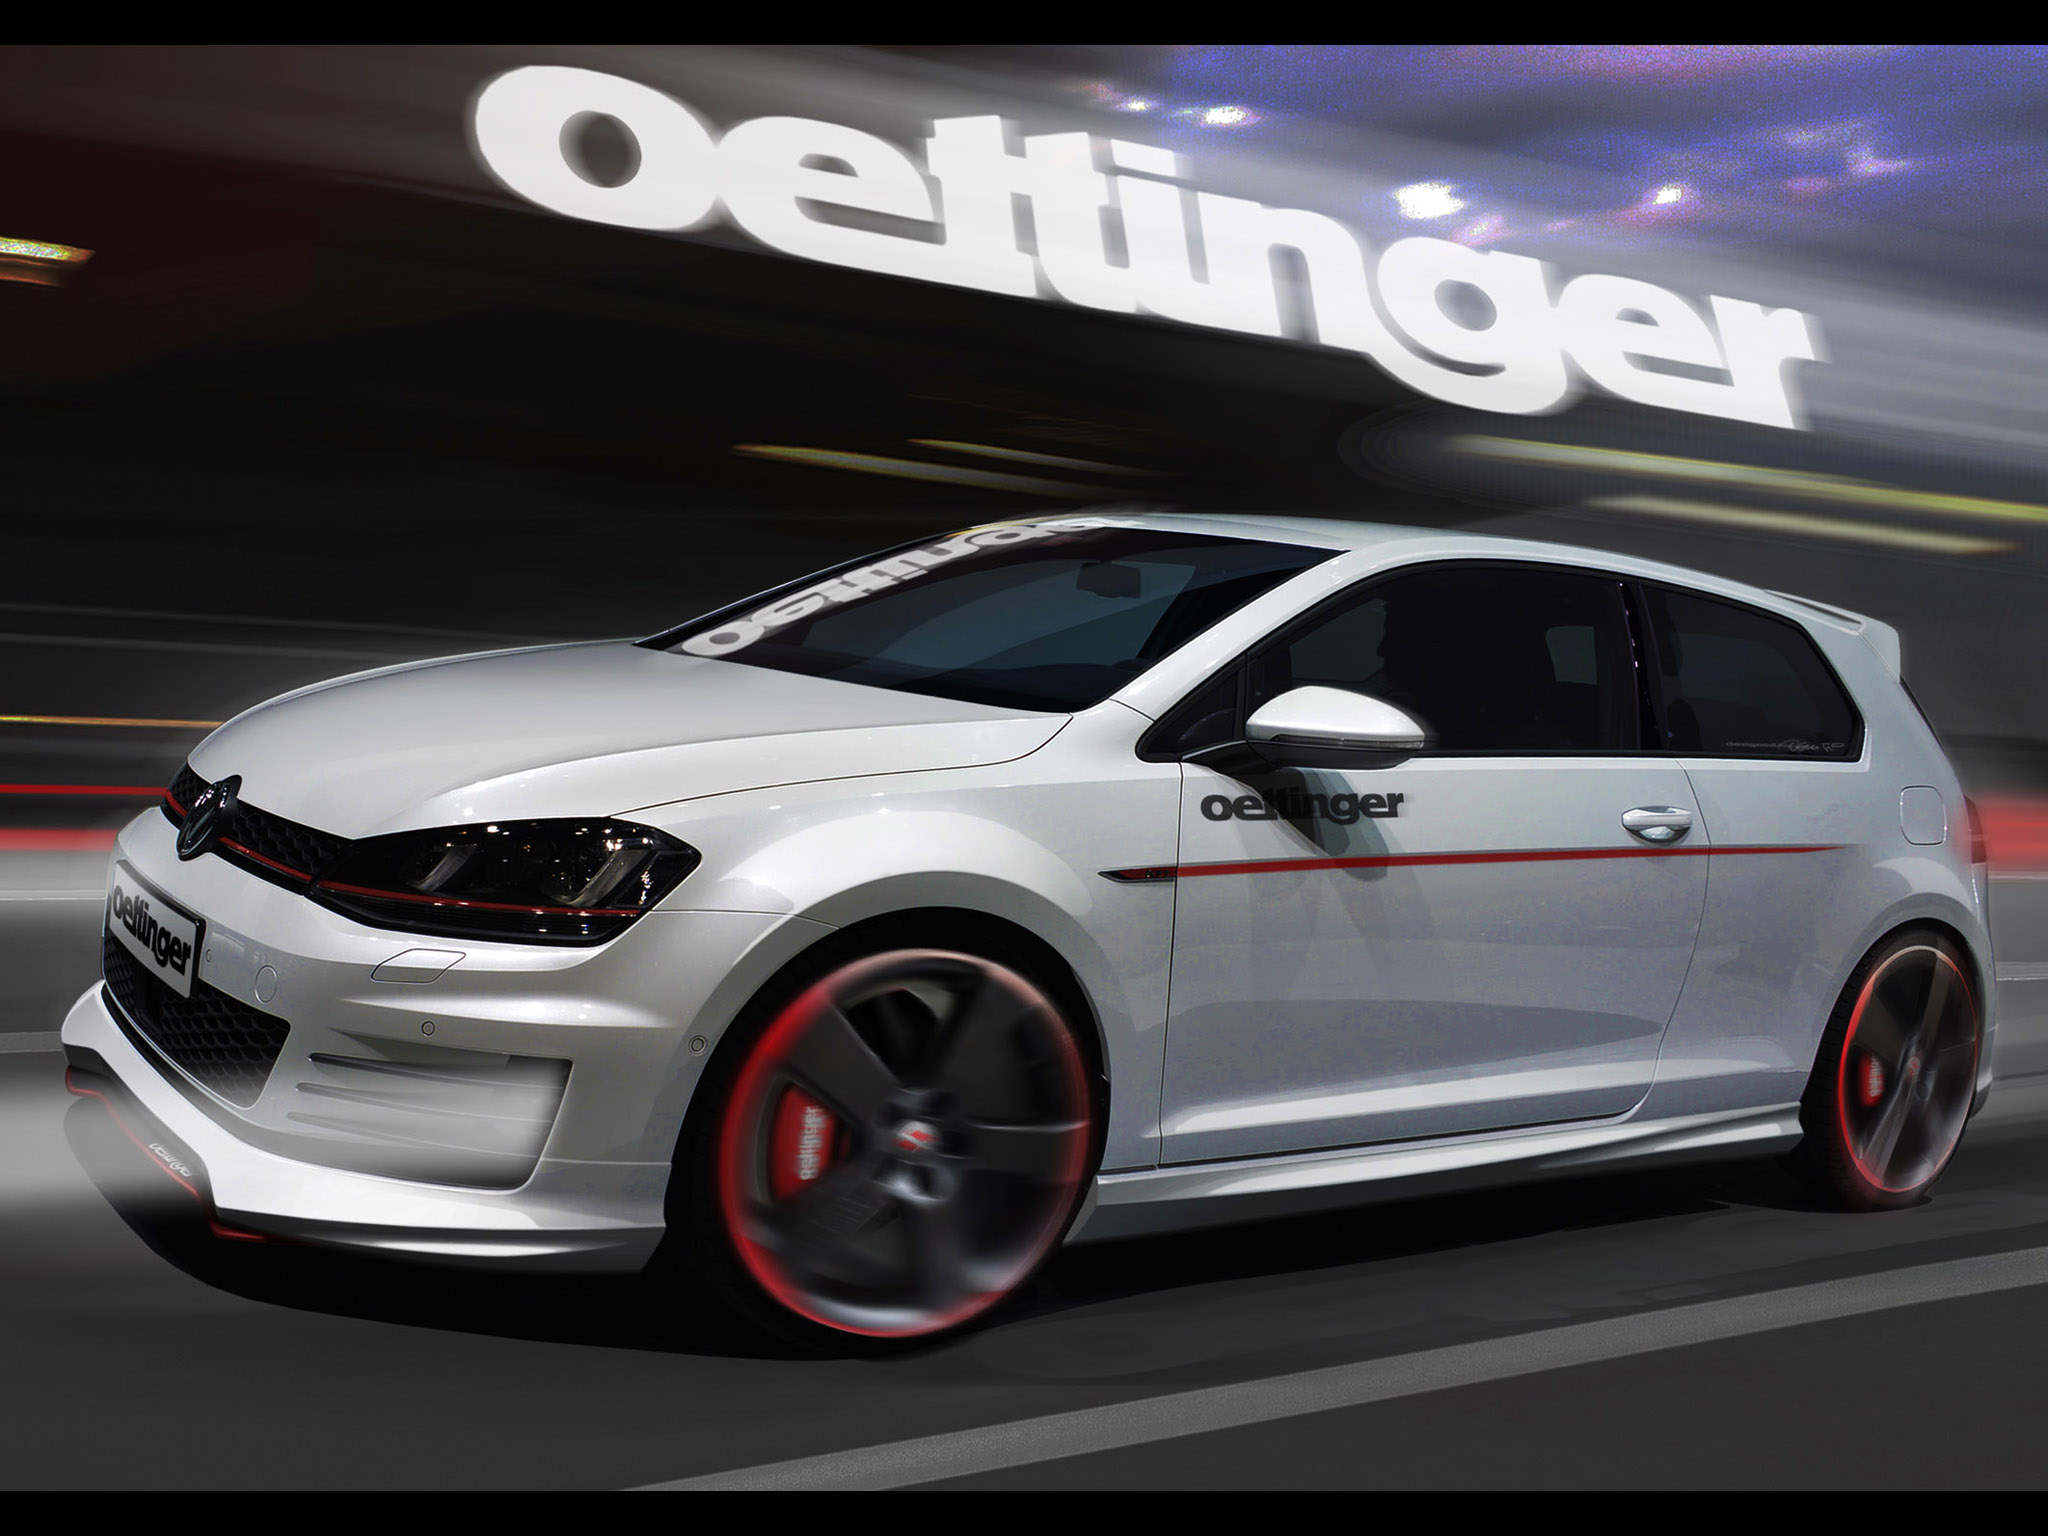 2013 Oettinger Volkswagen Golf GTI tuning wallpaper 2048x1536